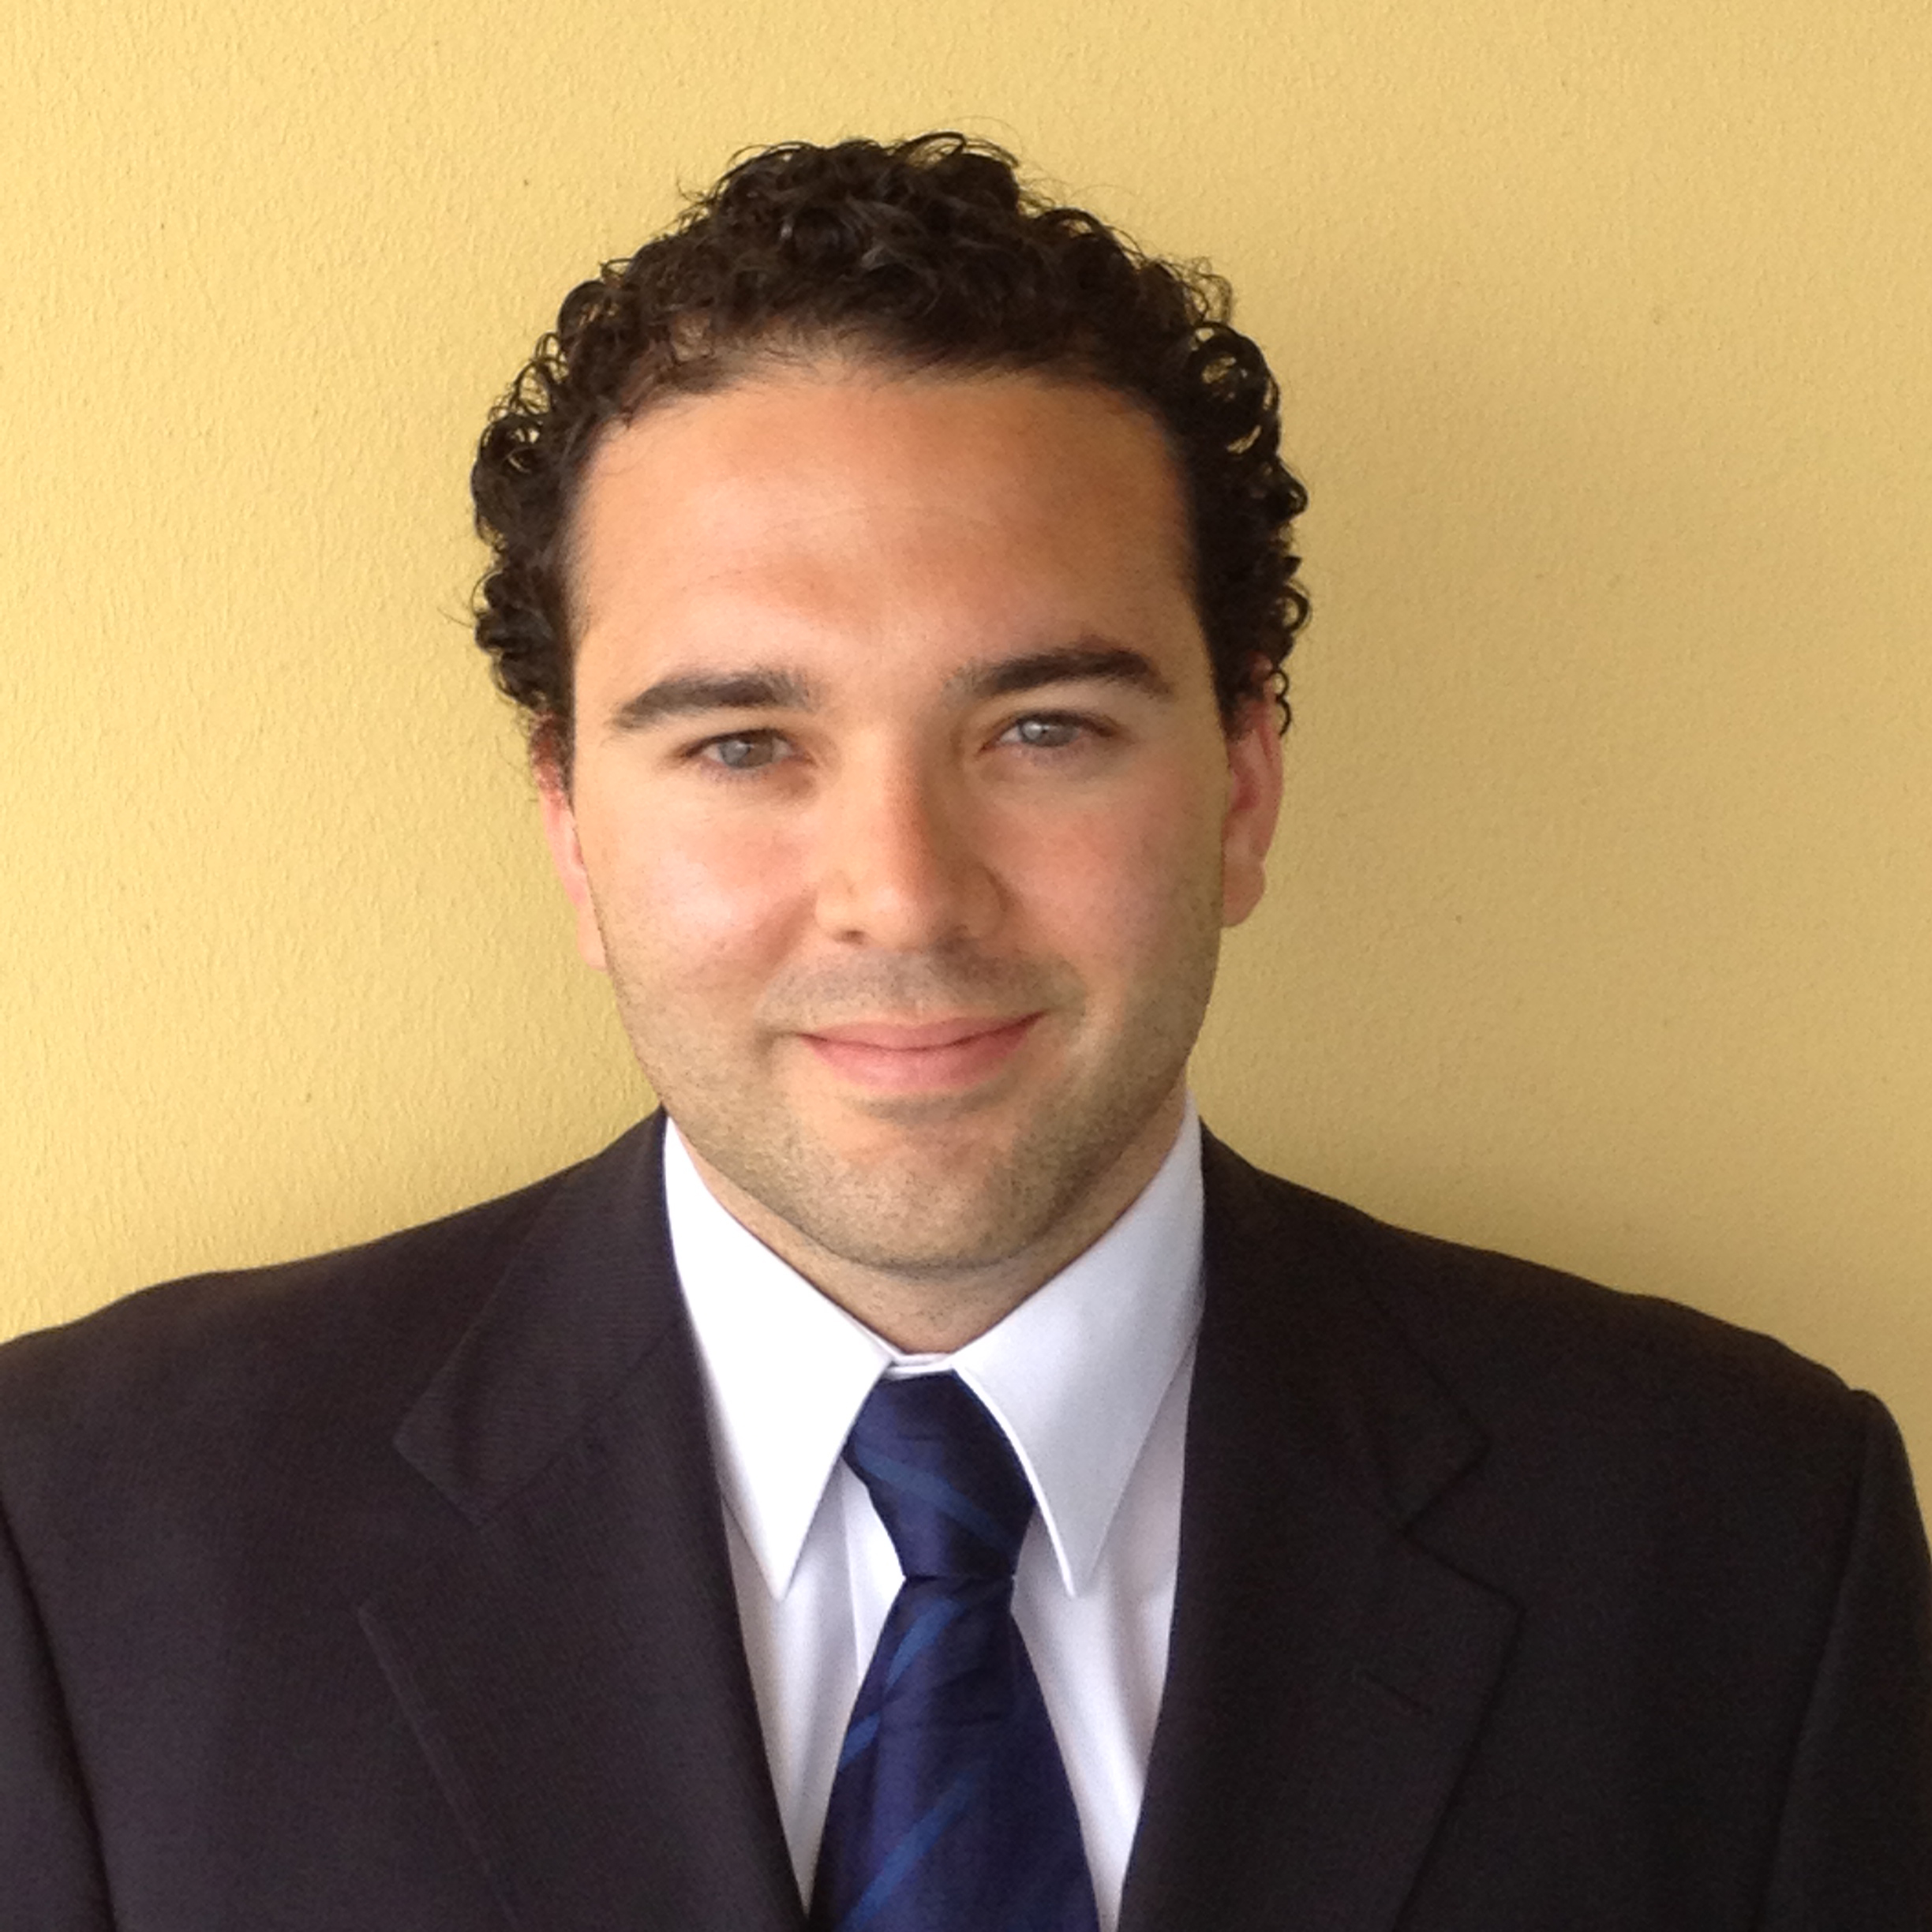 actuarial tools: Michael Umpierre (headshot), smiling man with short dark curly hair, dark jacket, white shirt, dark blue striped tie